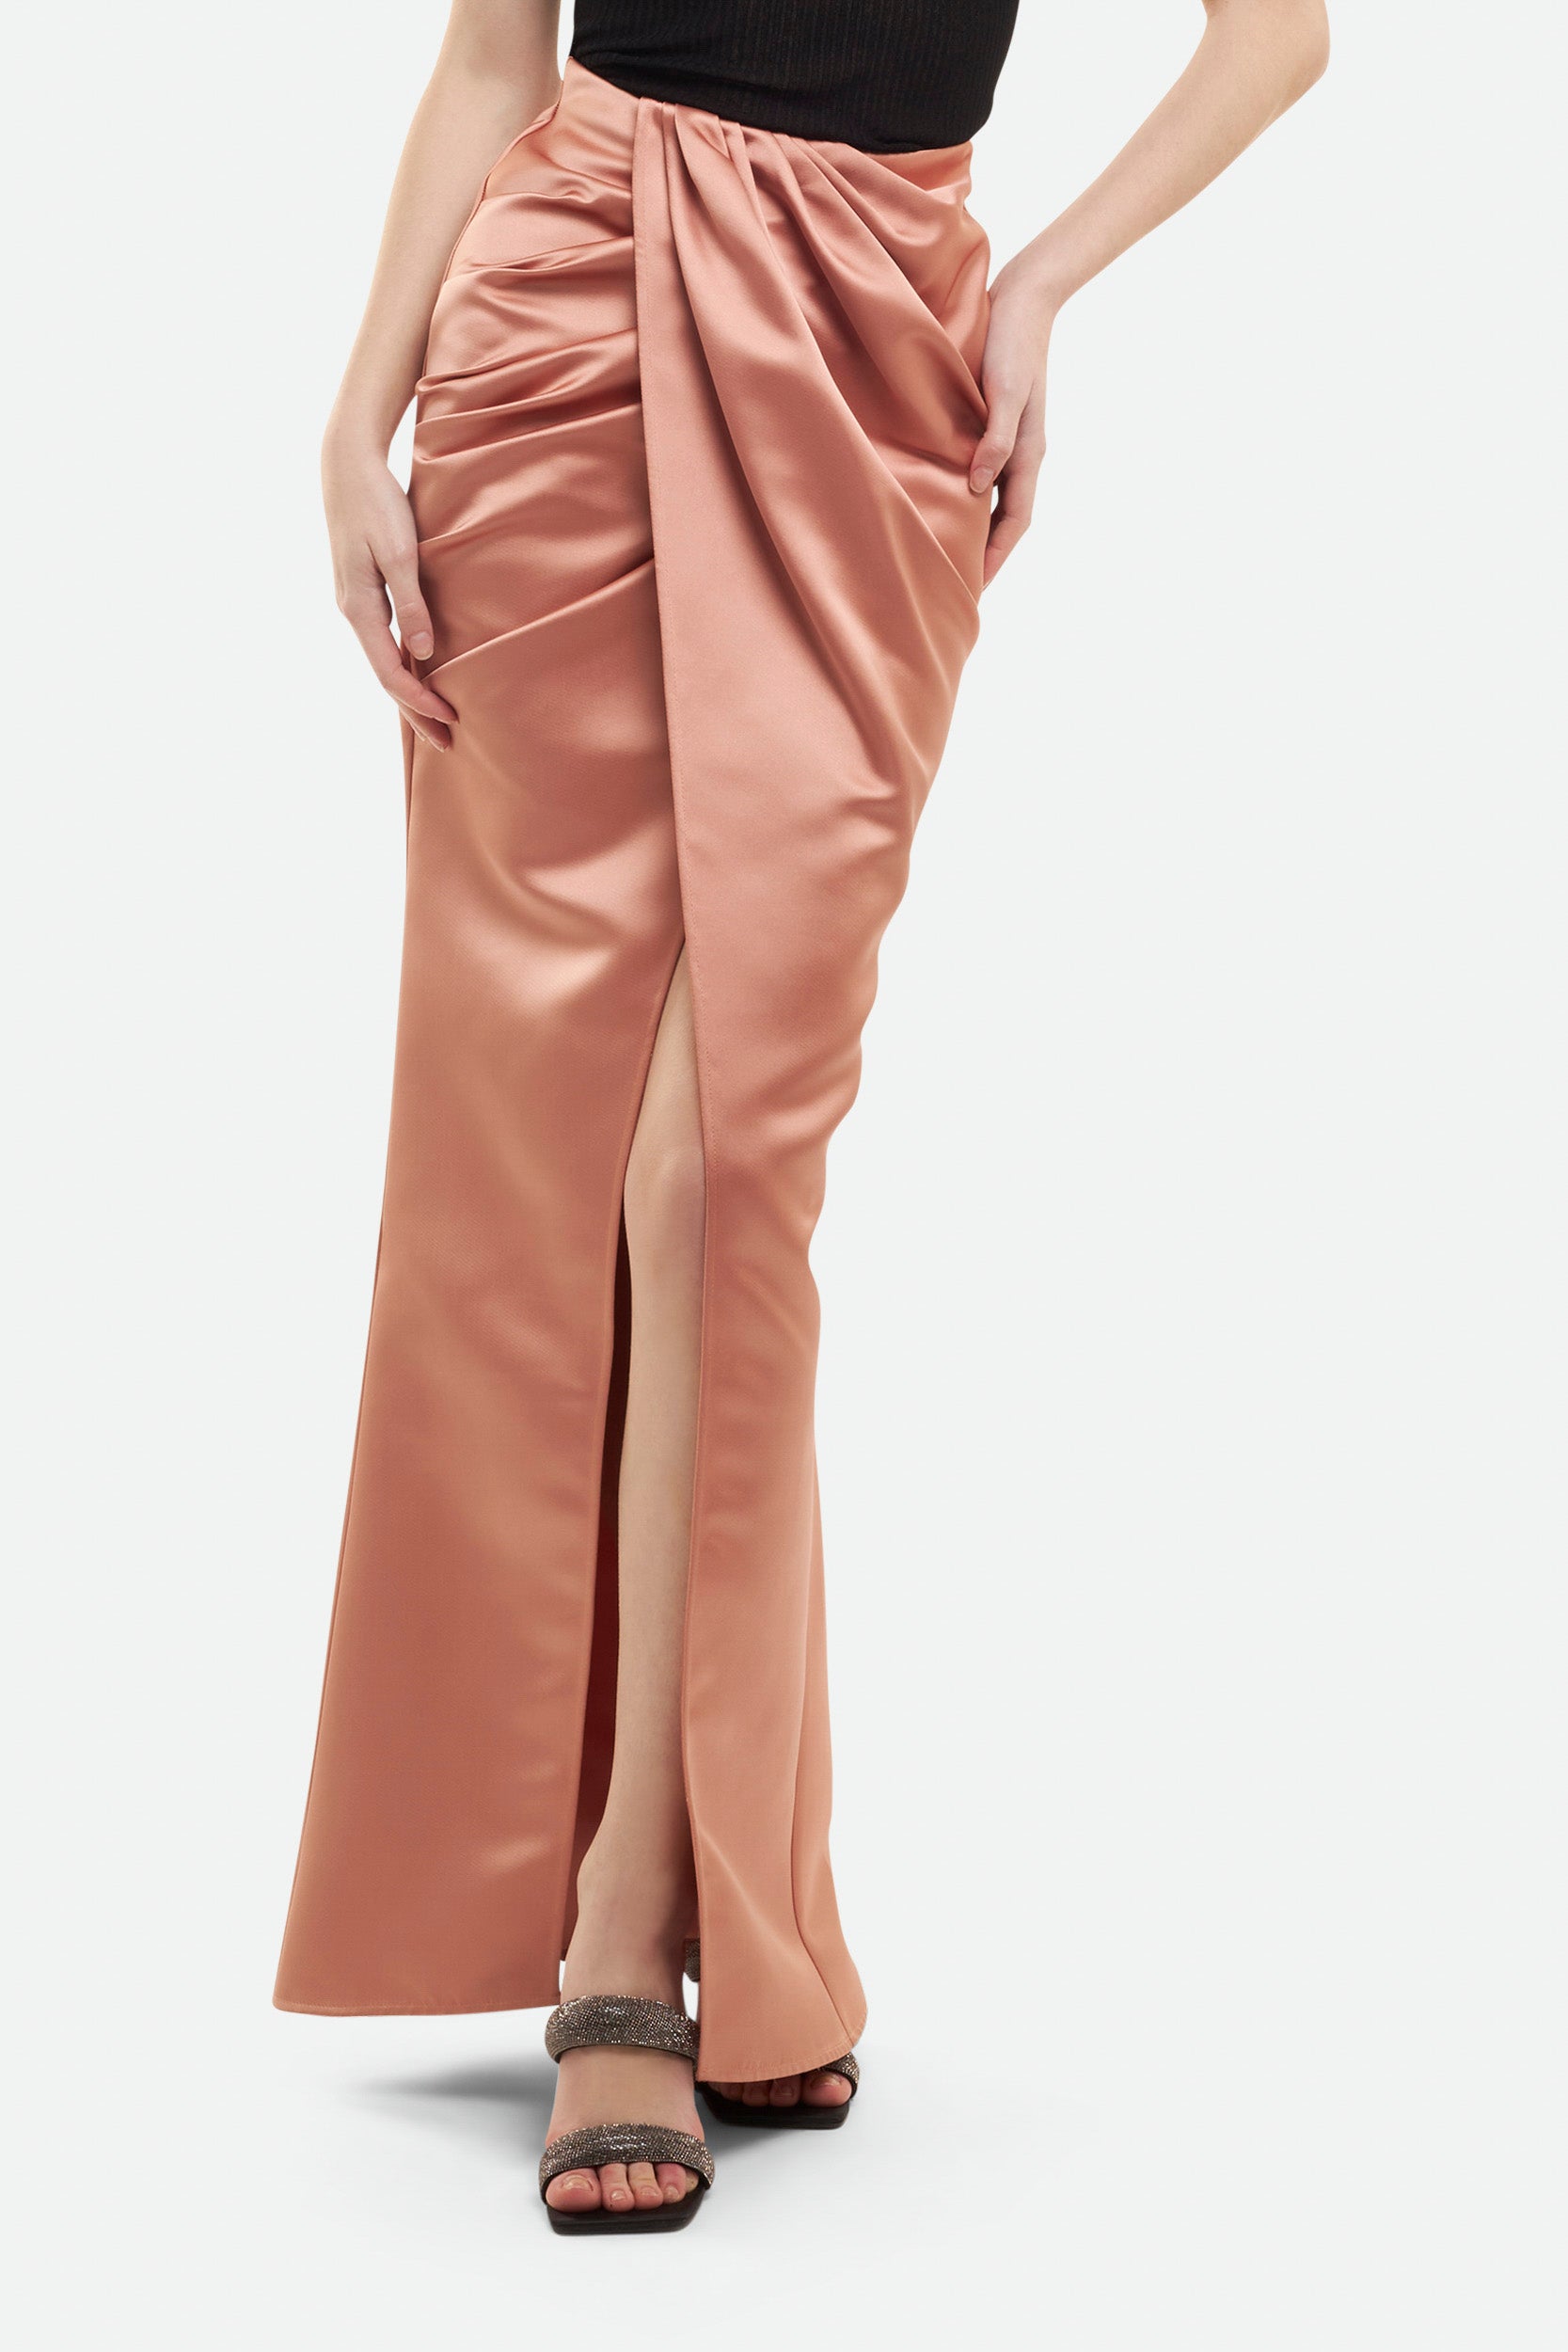 Elisabetta Franchi Pink Pencil Skirt